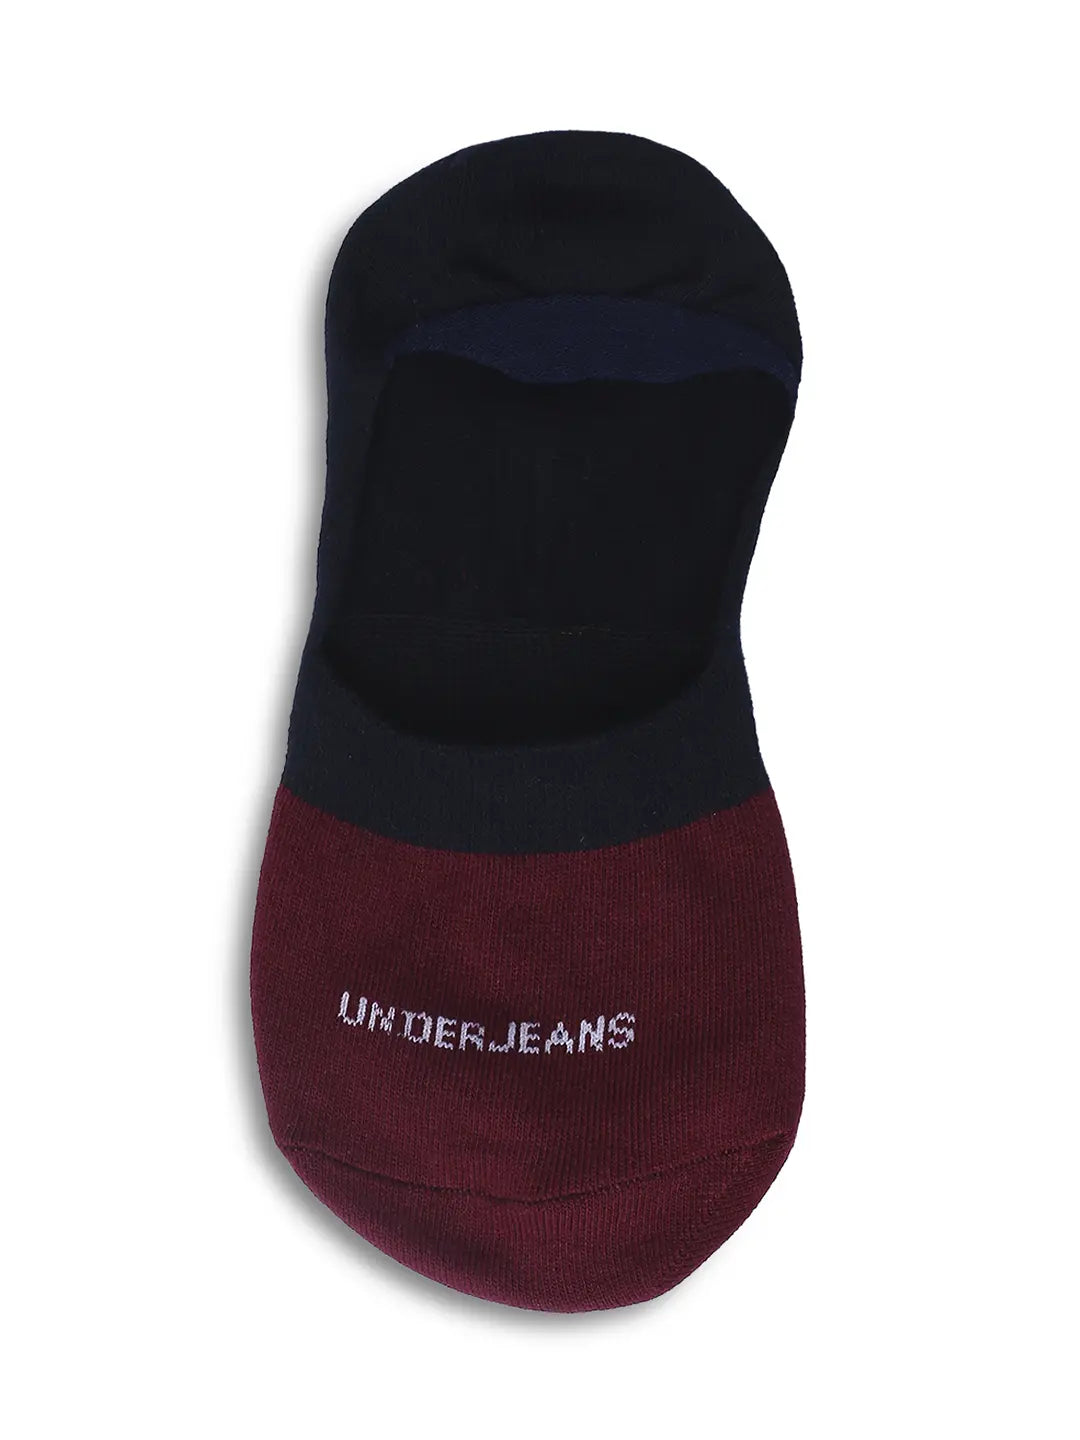 Men Black & Maroon Cotton Blend No Show Socks - Pack Of 2 - Underjeans by Spykar